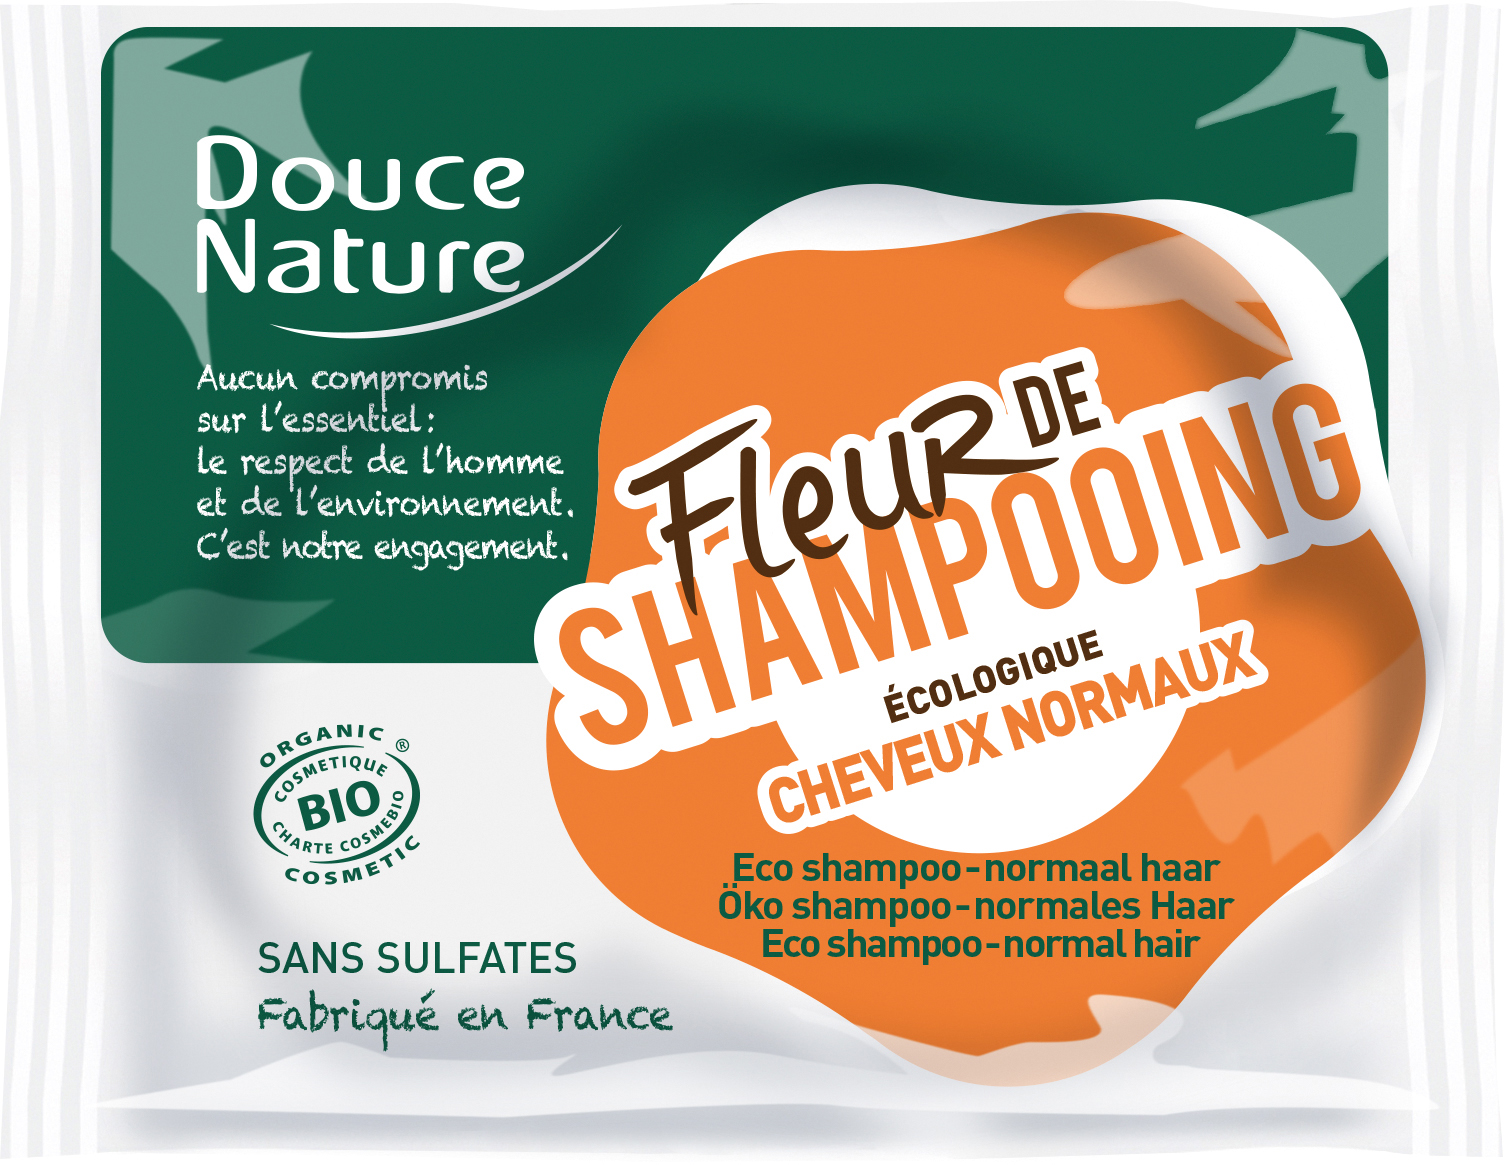 Douce Nature Eco shampoo - normal hair 85g